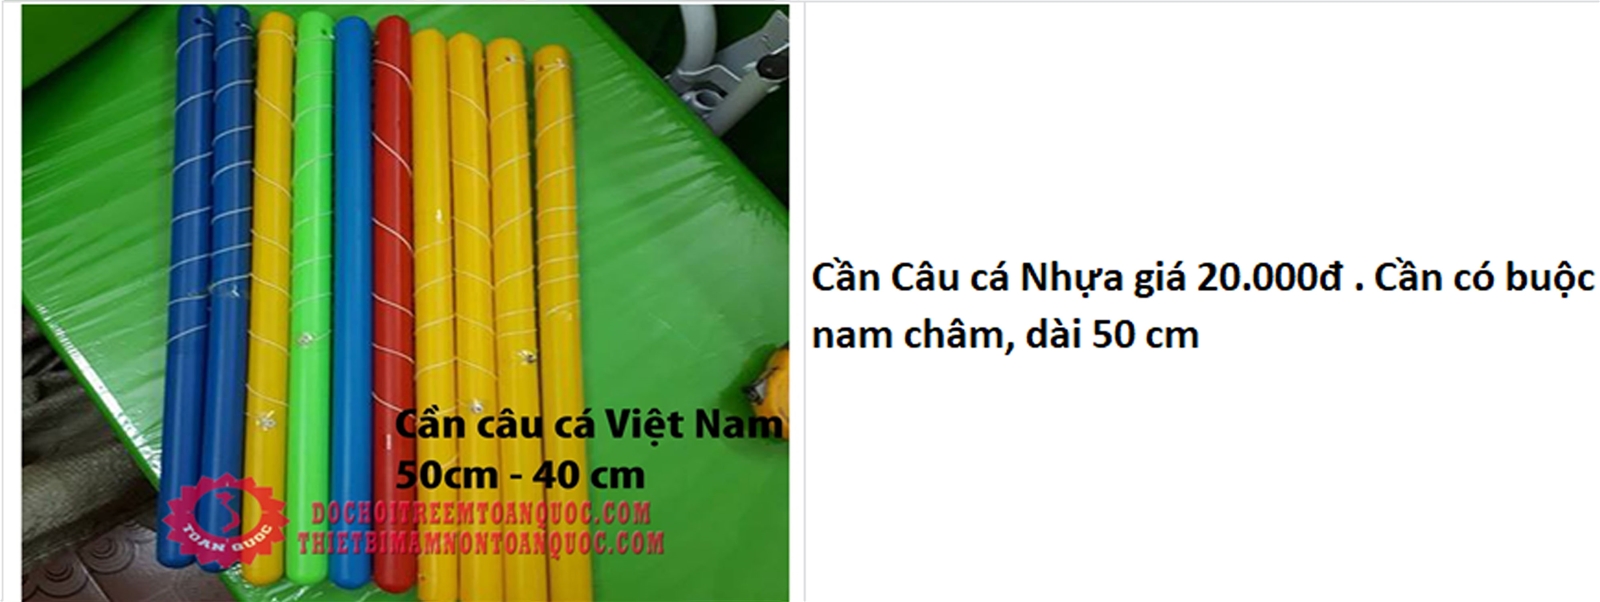 Cần câu cá nhựa Việt Nam